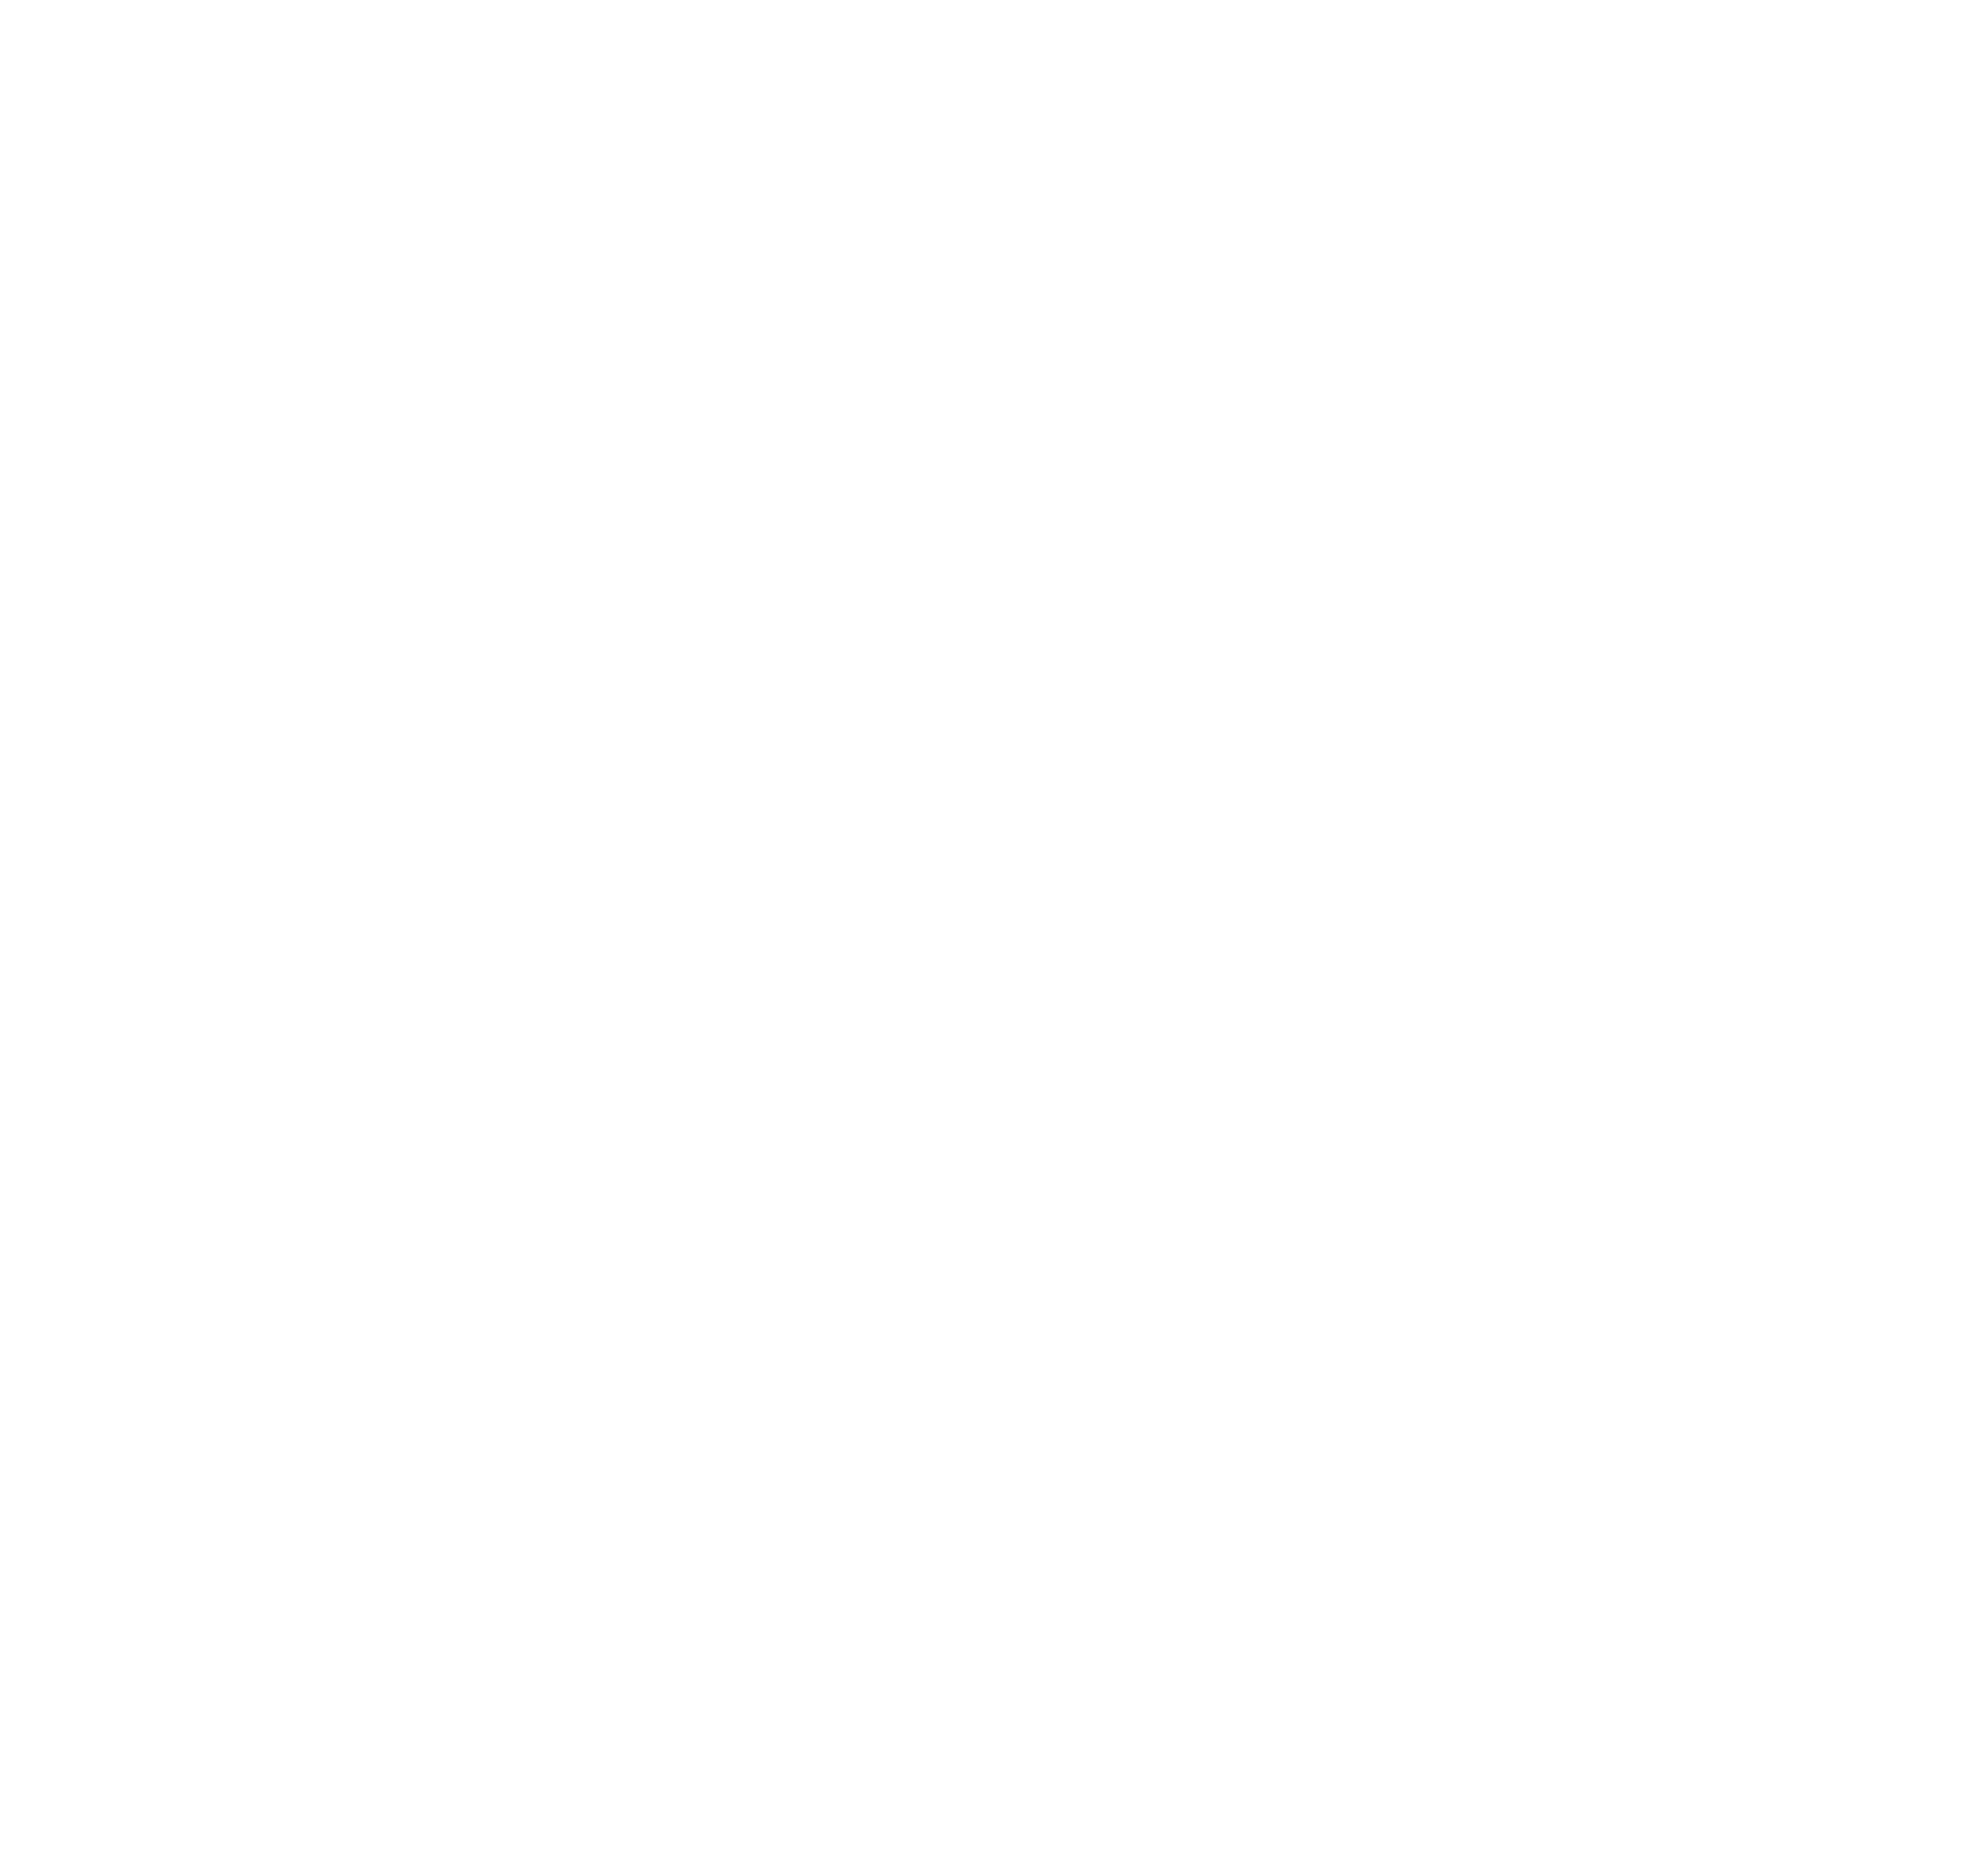 uefa uefa,uefa europa league,barcelona vs manchester united